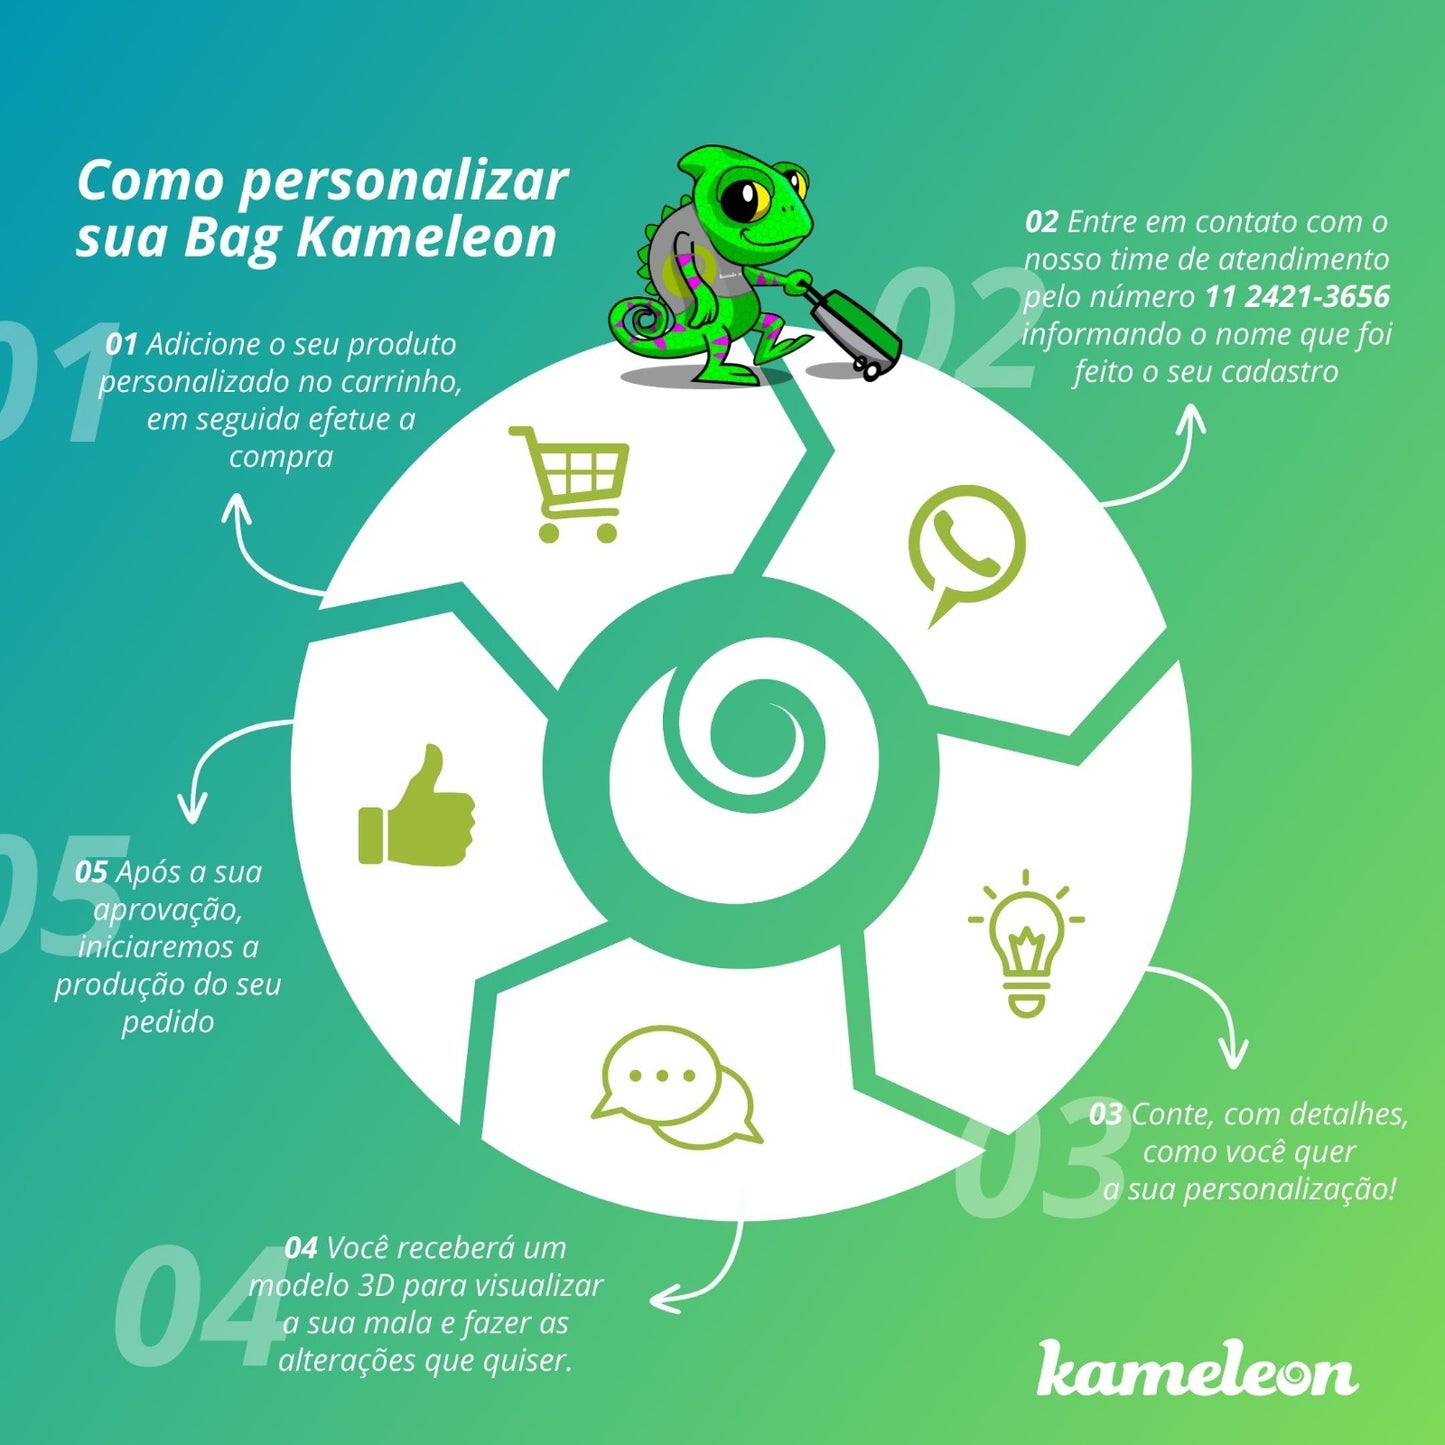 Mala de Bordo Personalizada - Kameleon - Personalize com seu estilo